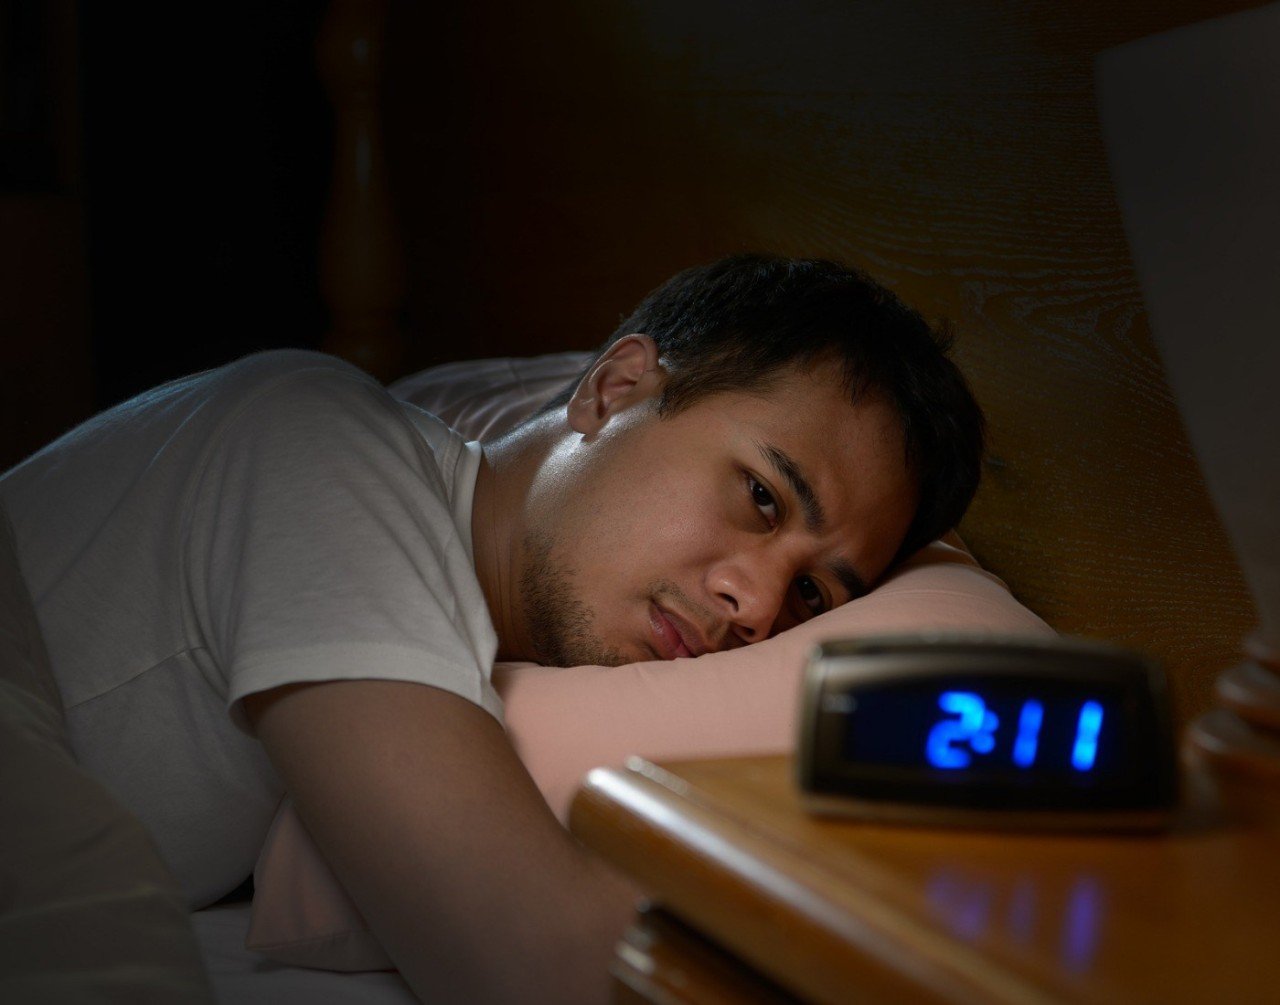 7habits to avoid for better sleep